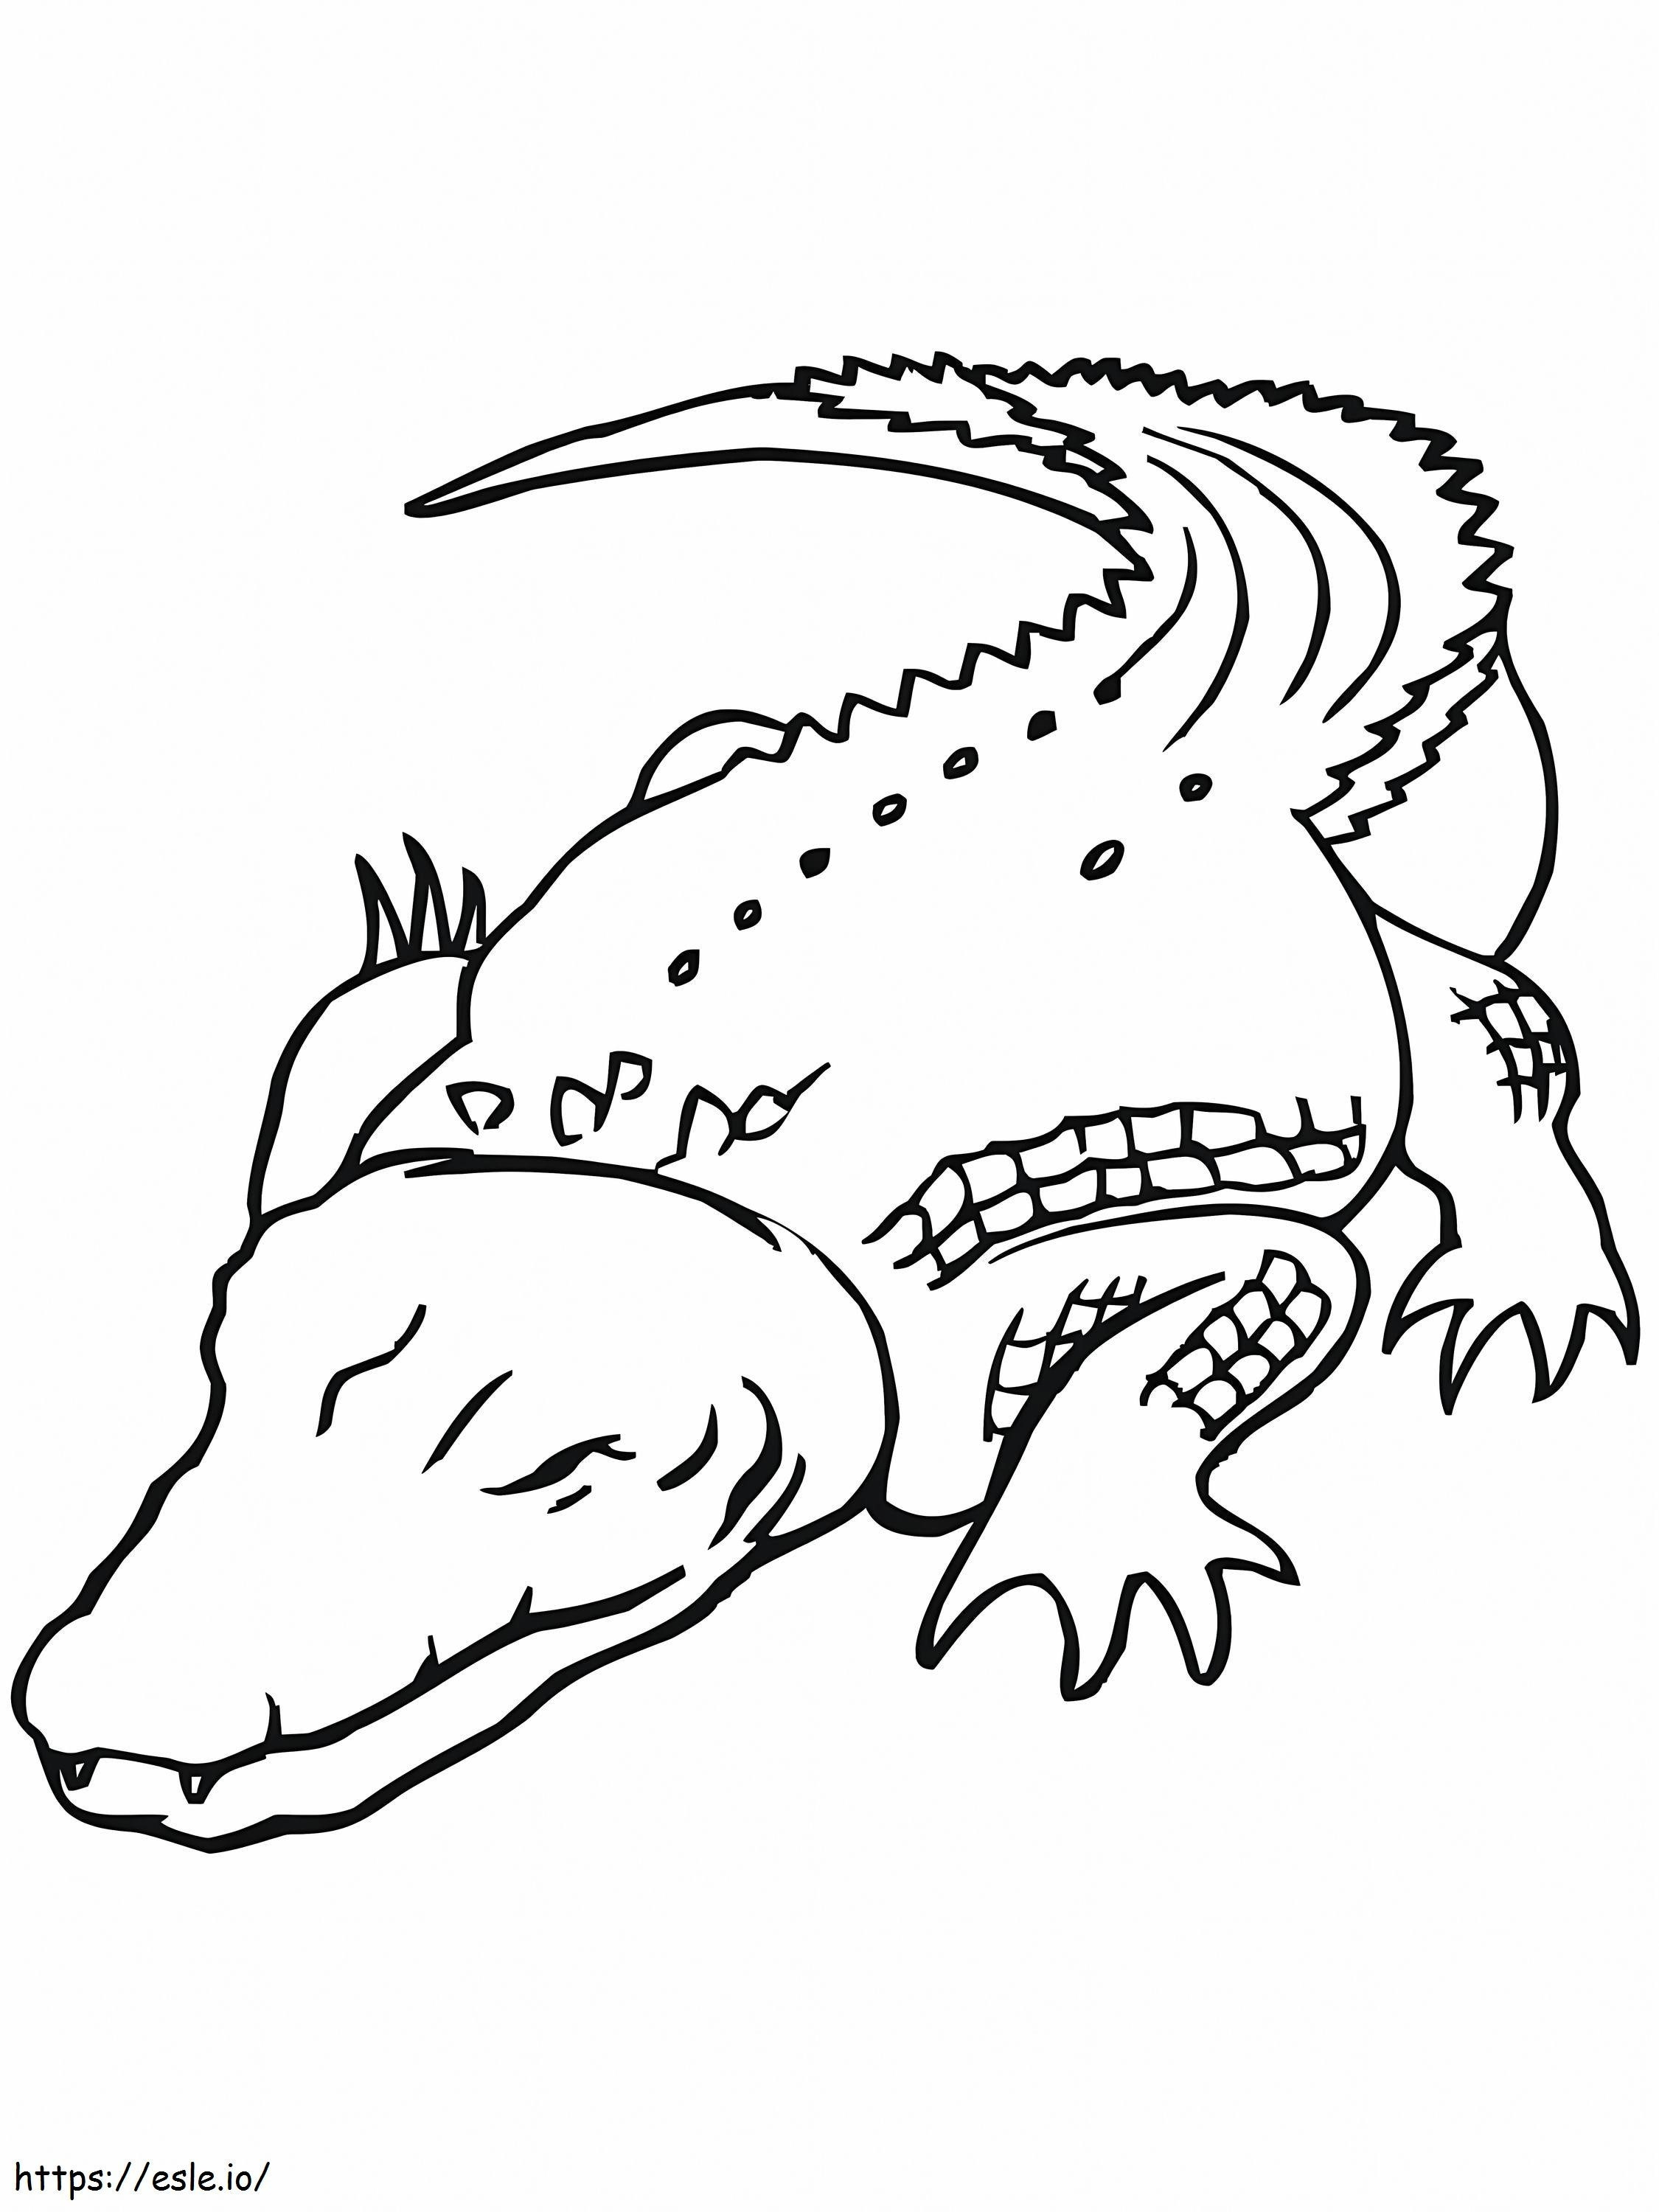 Sleeping Crocodile coloring page